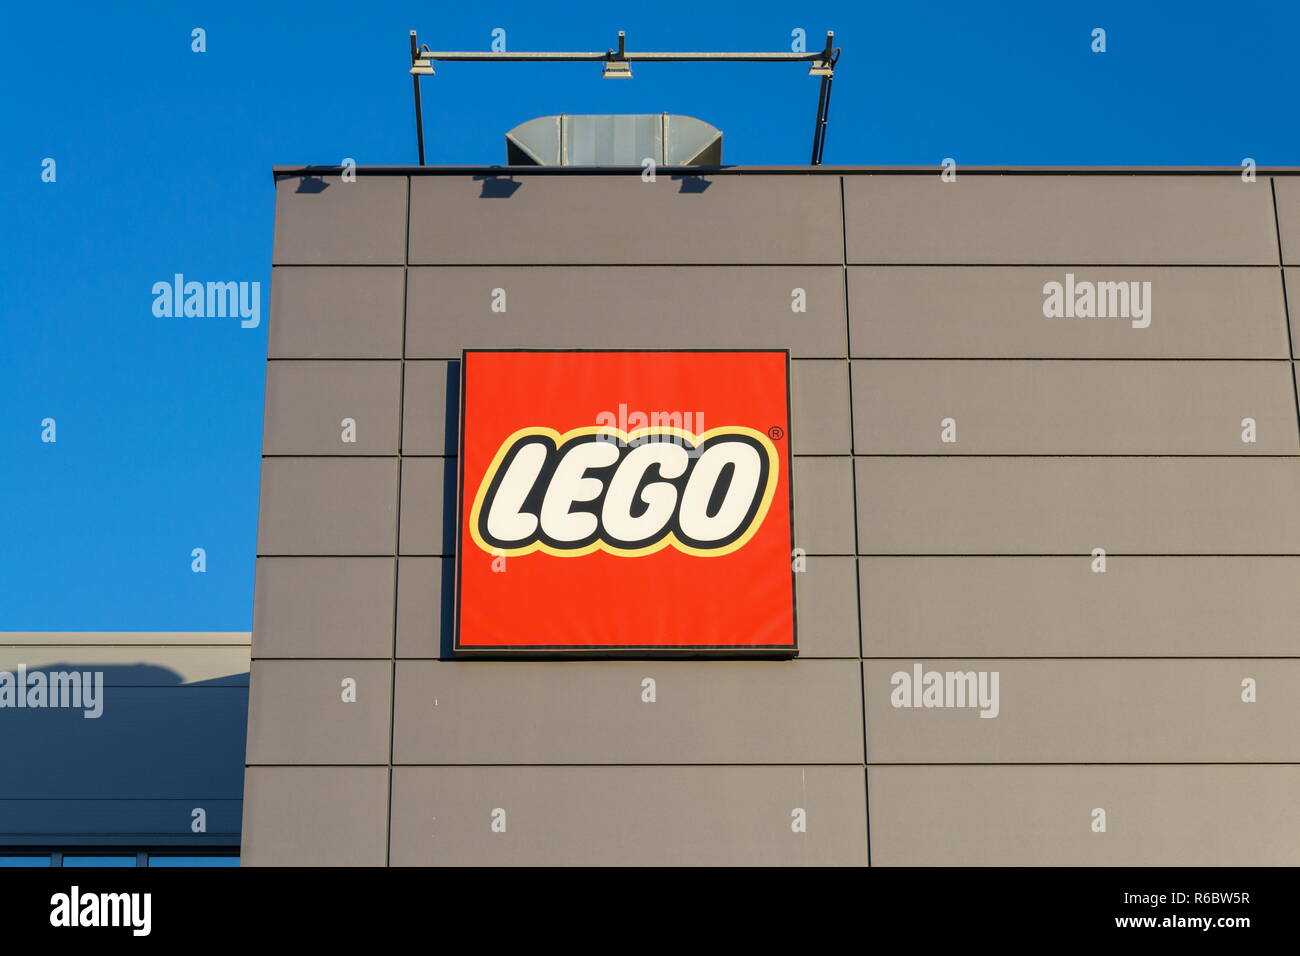 KLADNO, CZECH REPUBLIC - DECEMBER 4 2018: The Lego Group company logo on production factory building on December 4, 2018 in Kladno, Czech Republic. Stock Photo